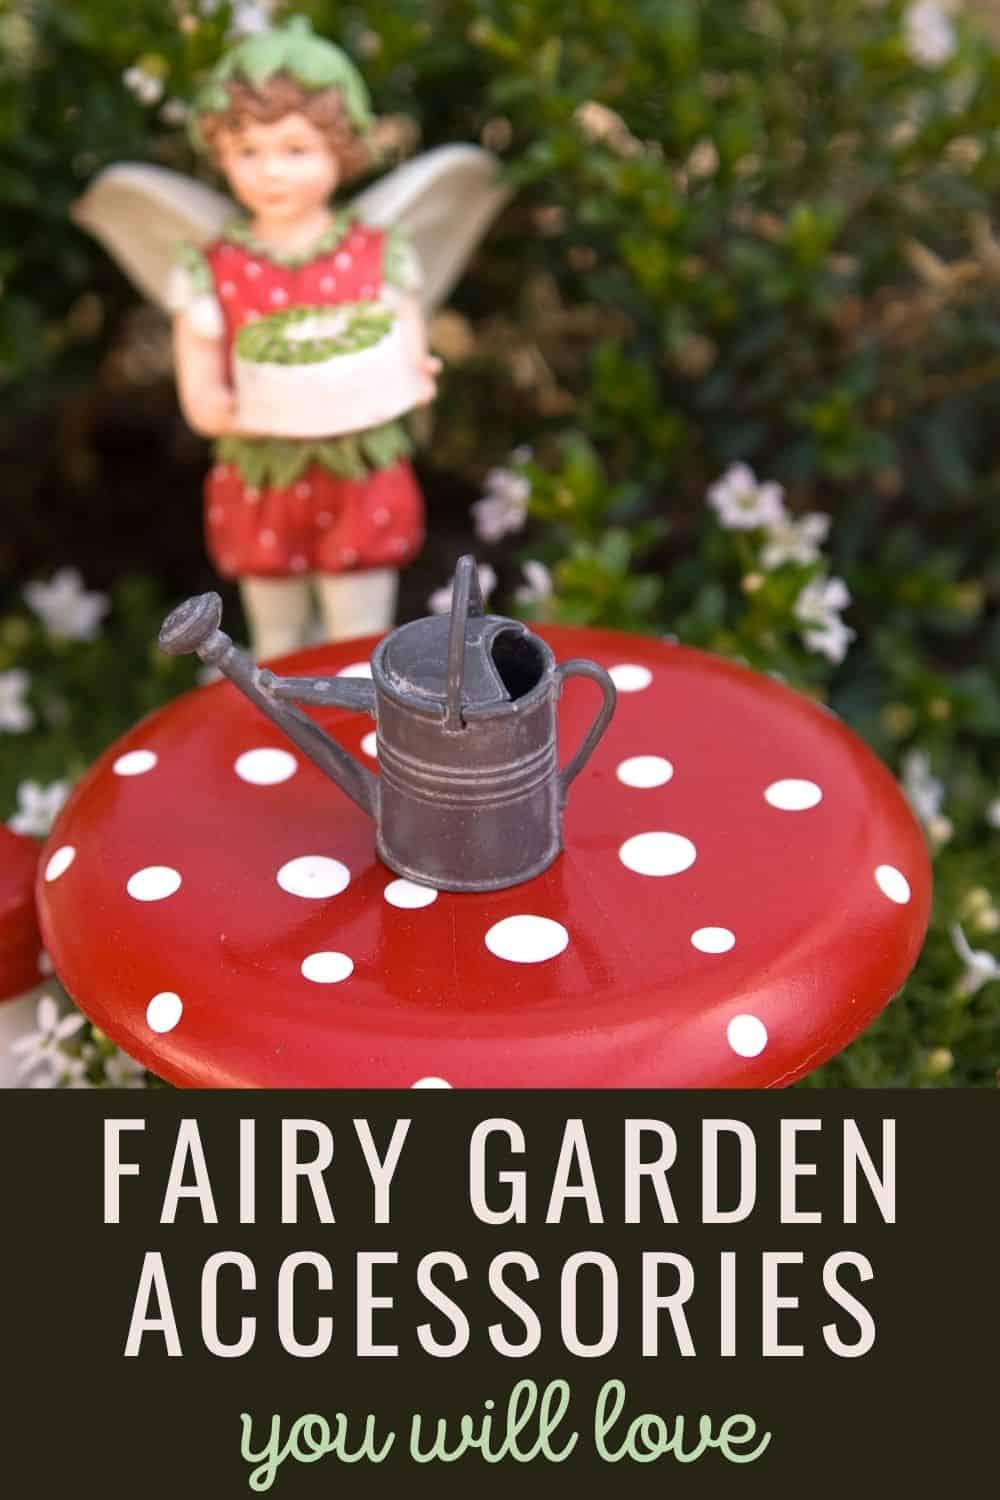 Fairy garden accessories you will love